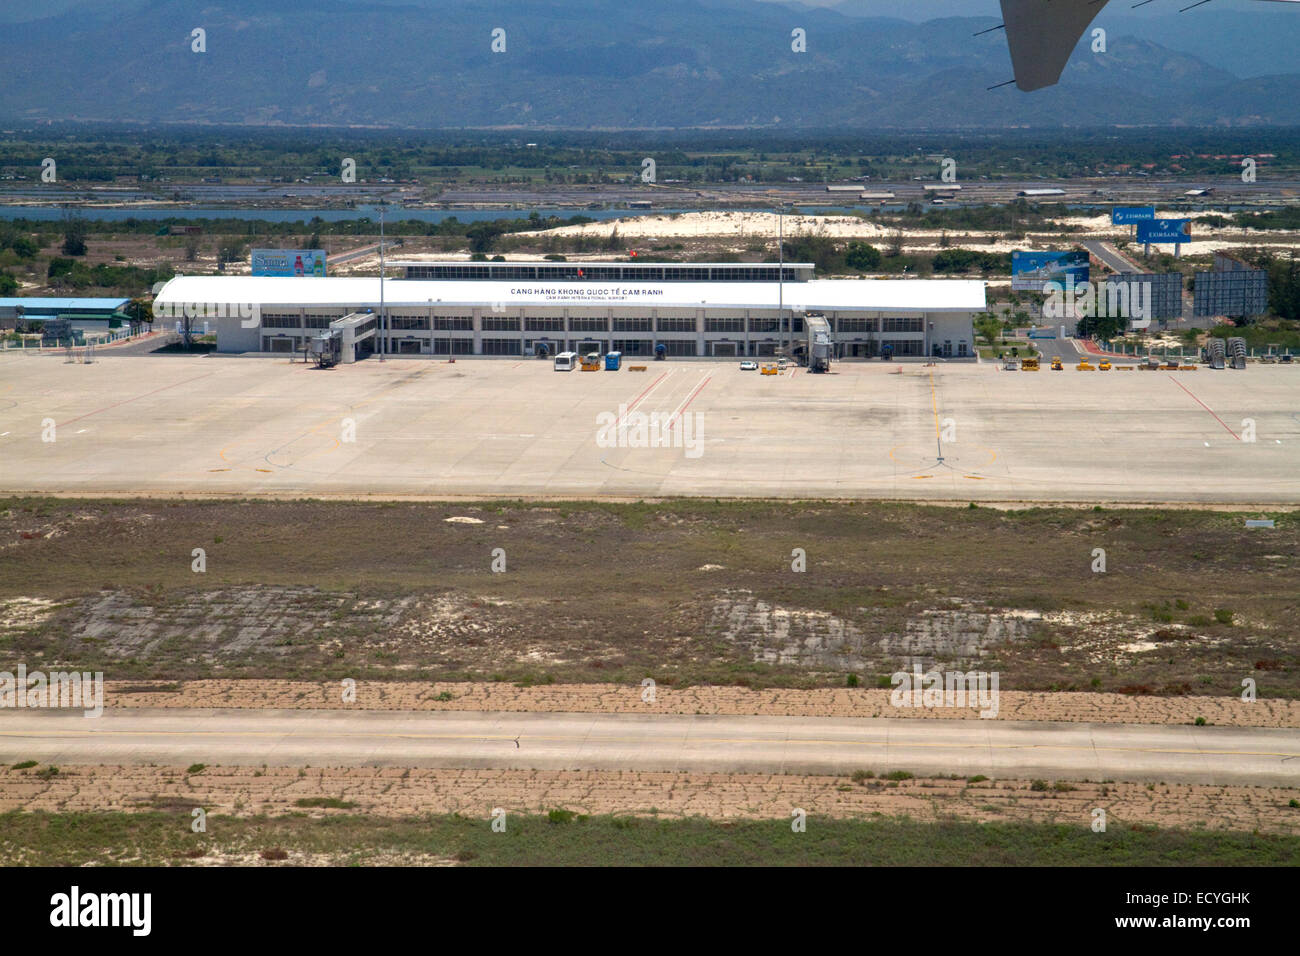 Vue de l'aéroport international de Cam Ranh, Cam Ranh, Vietnam. Banque D'Images